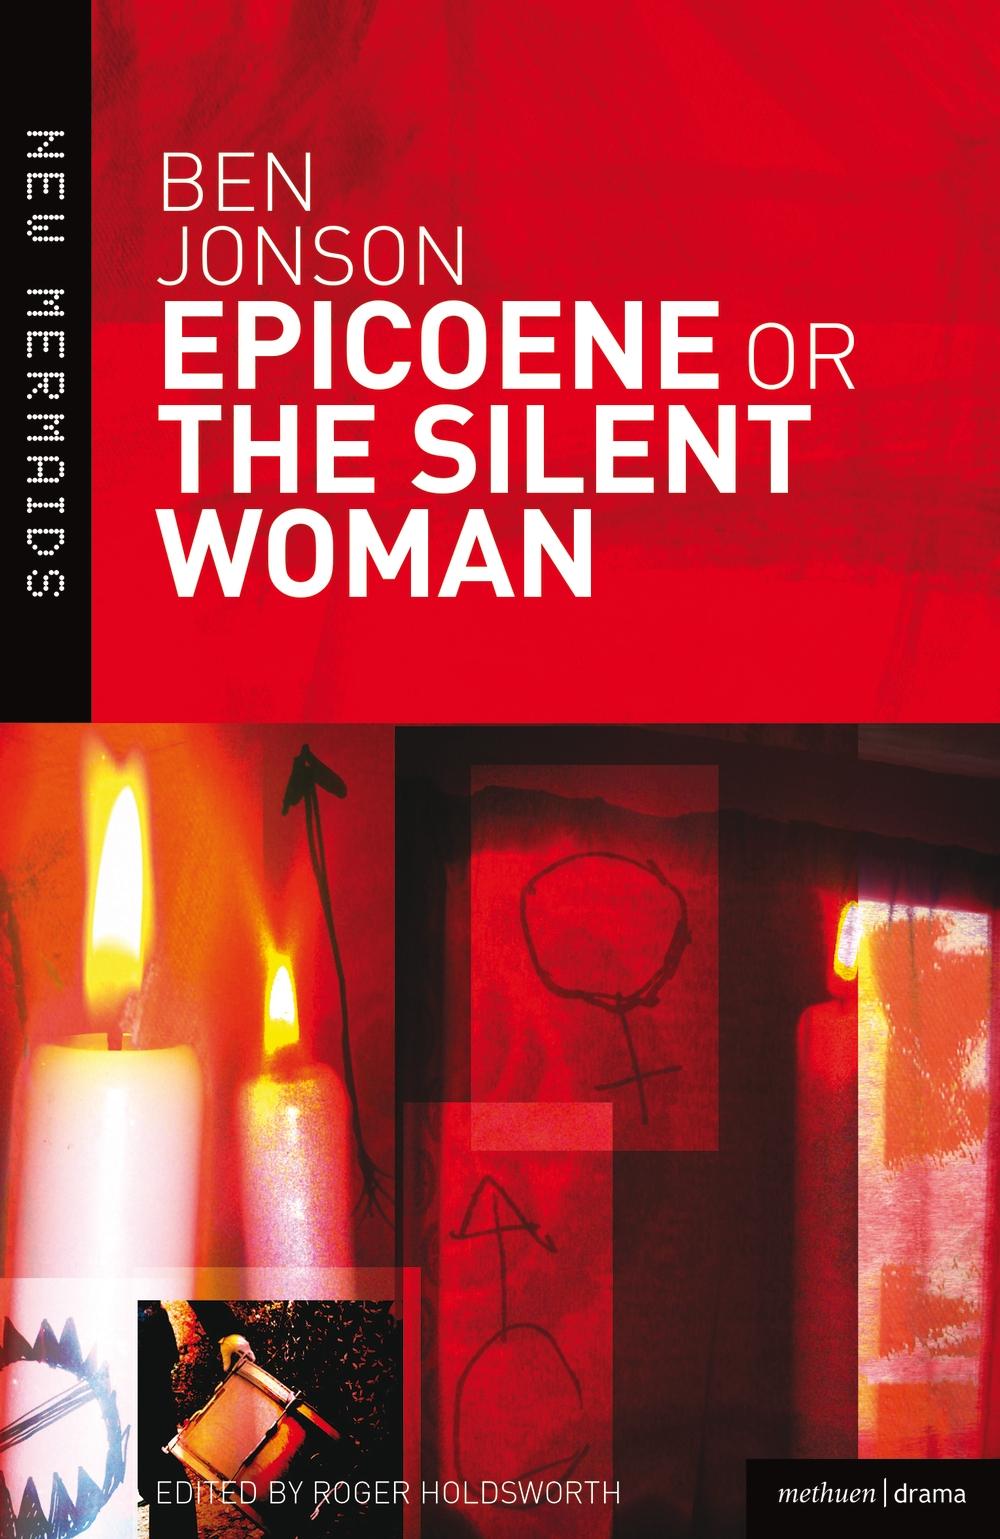 "Epicoene" or the "Silent Woman"